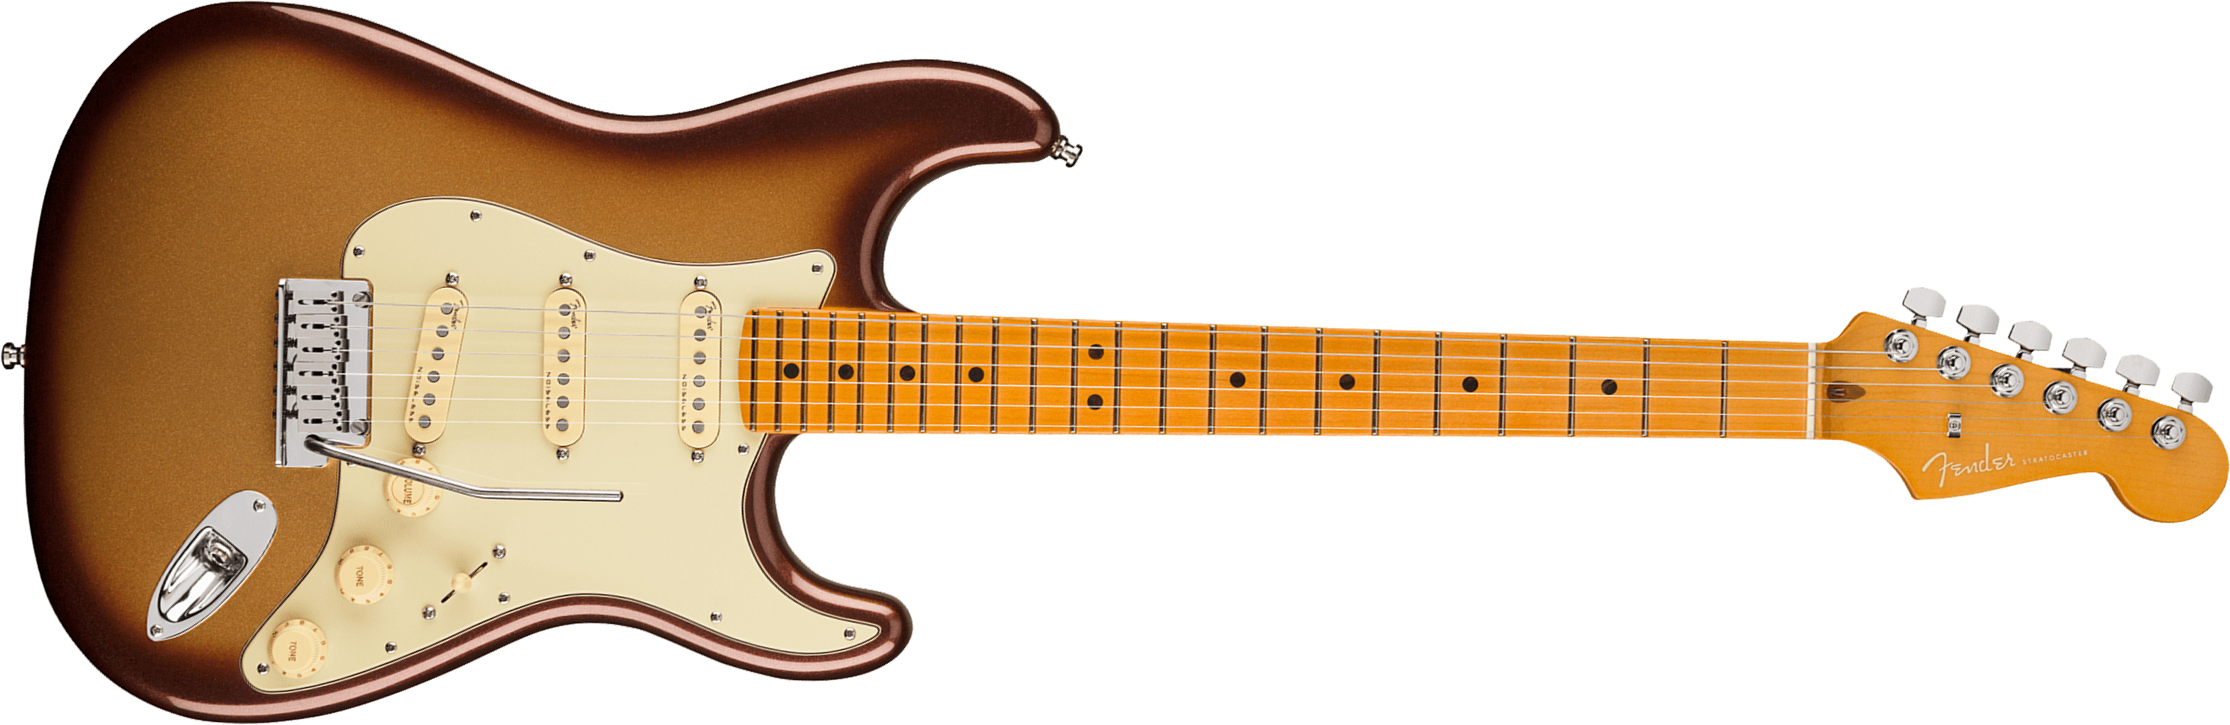 Fender Strat American Ultra 2019 Usa Mn - Mocha Burst - Guitarra eléctrica con forma de str. - Main picture